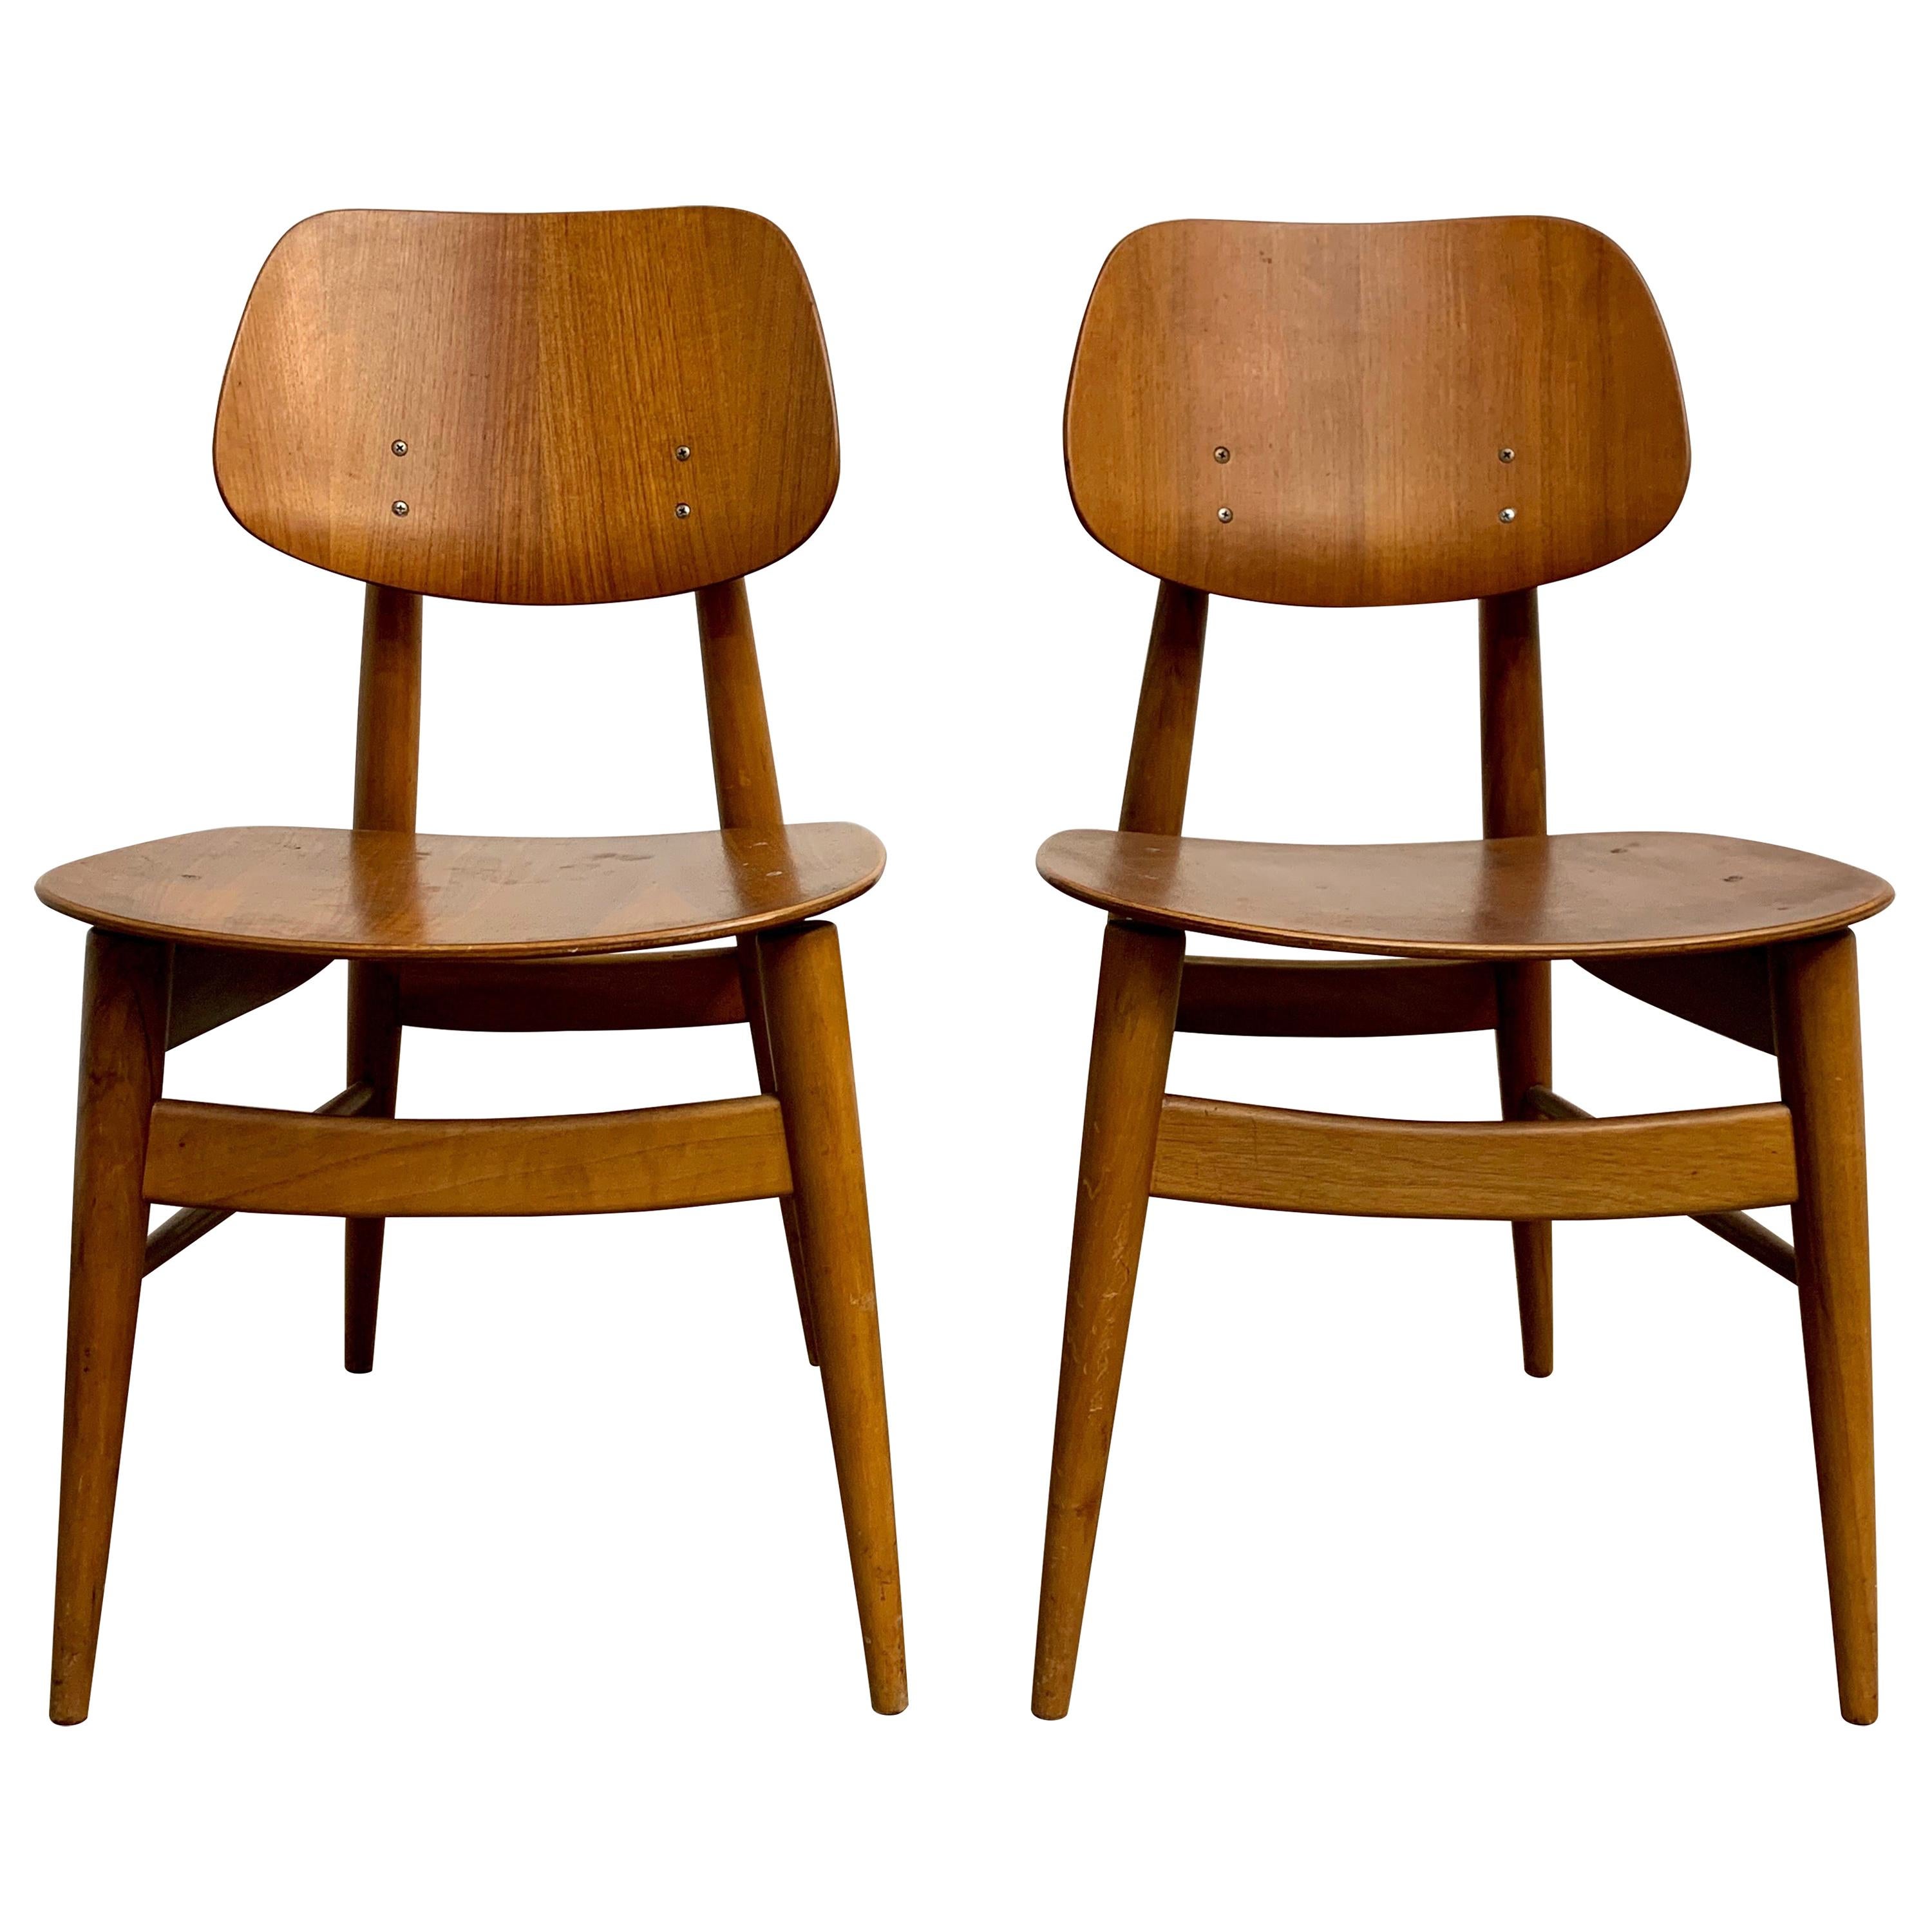 Thonet Bent Walnut Plywood Chairs